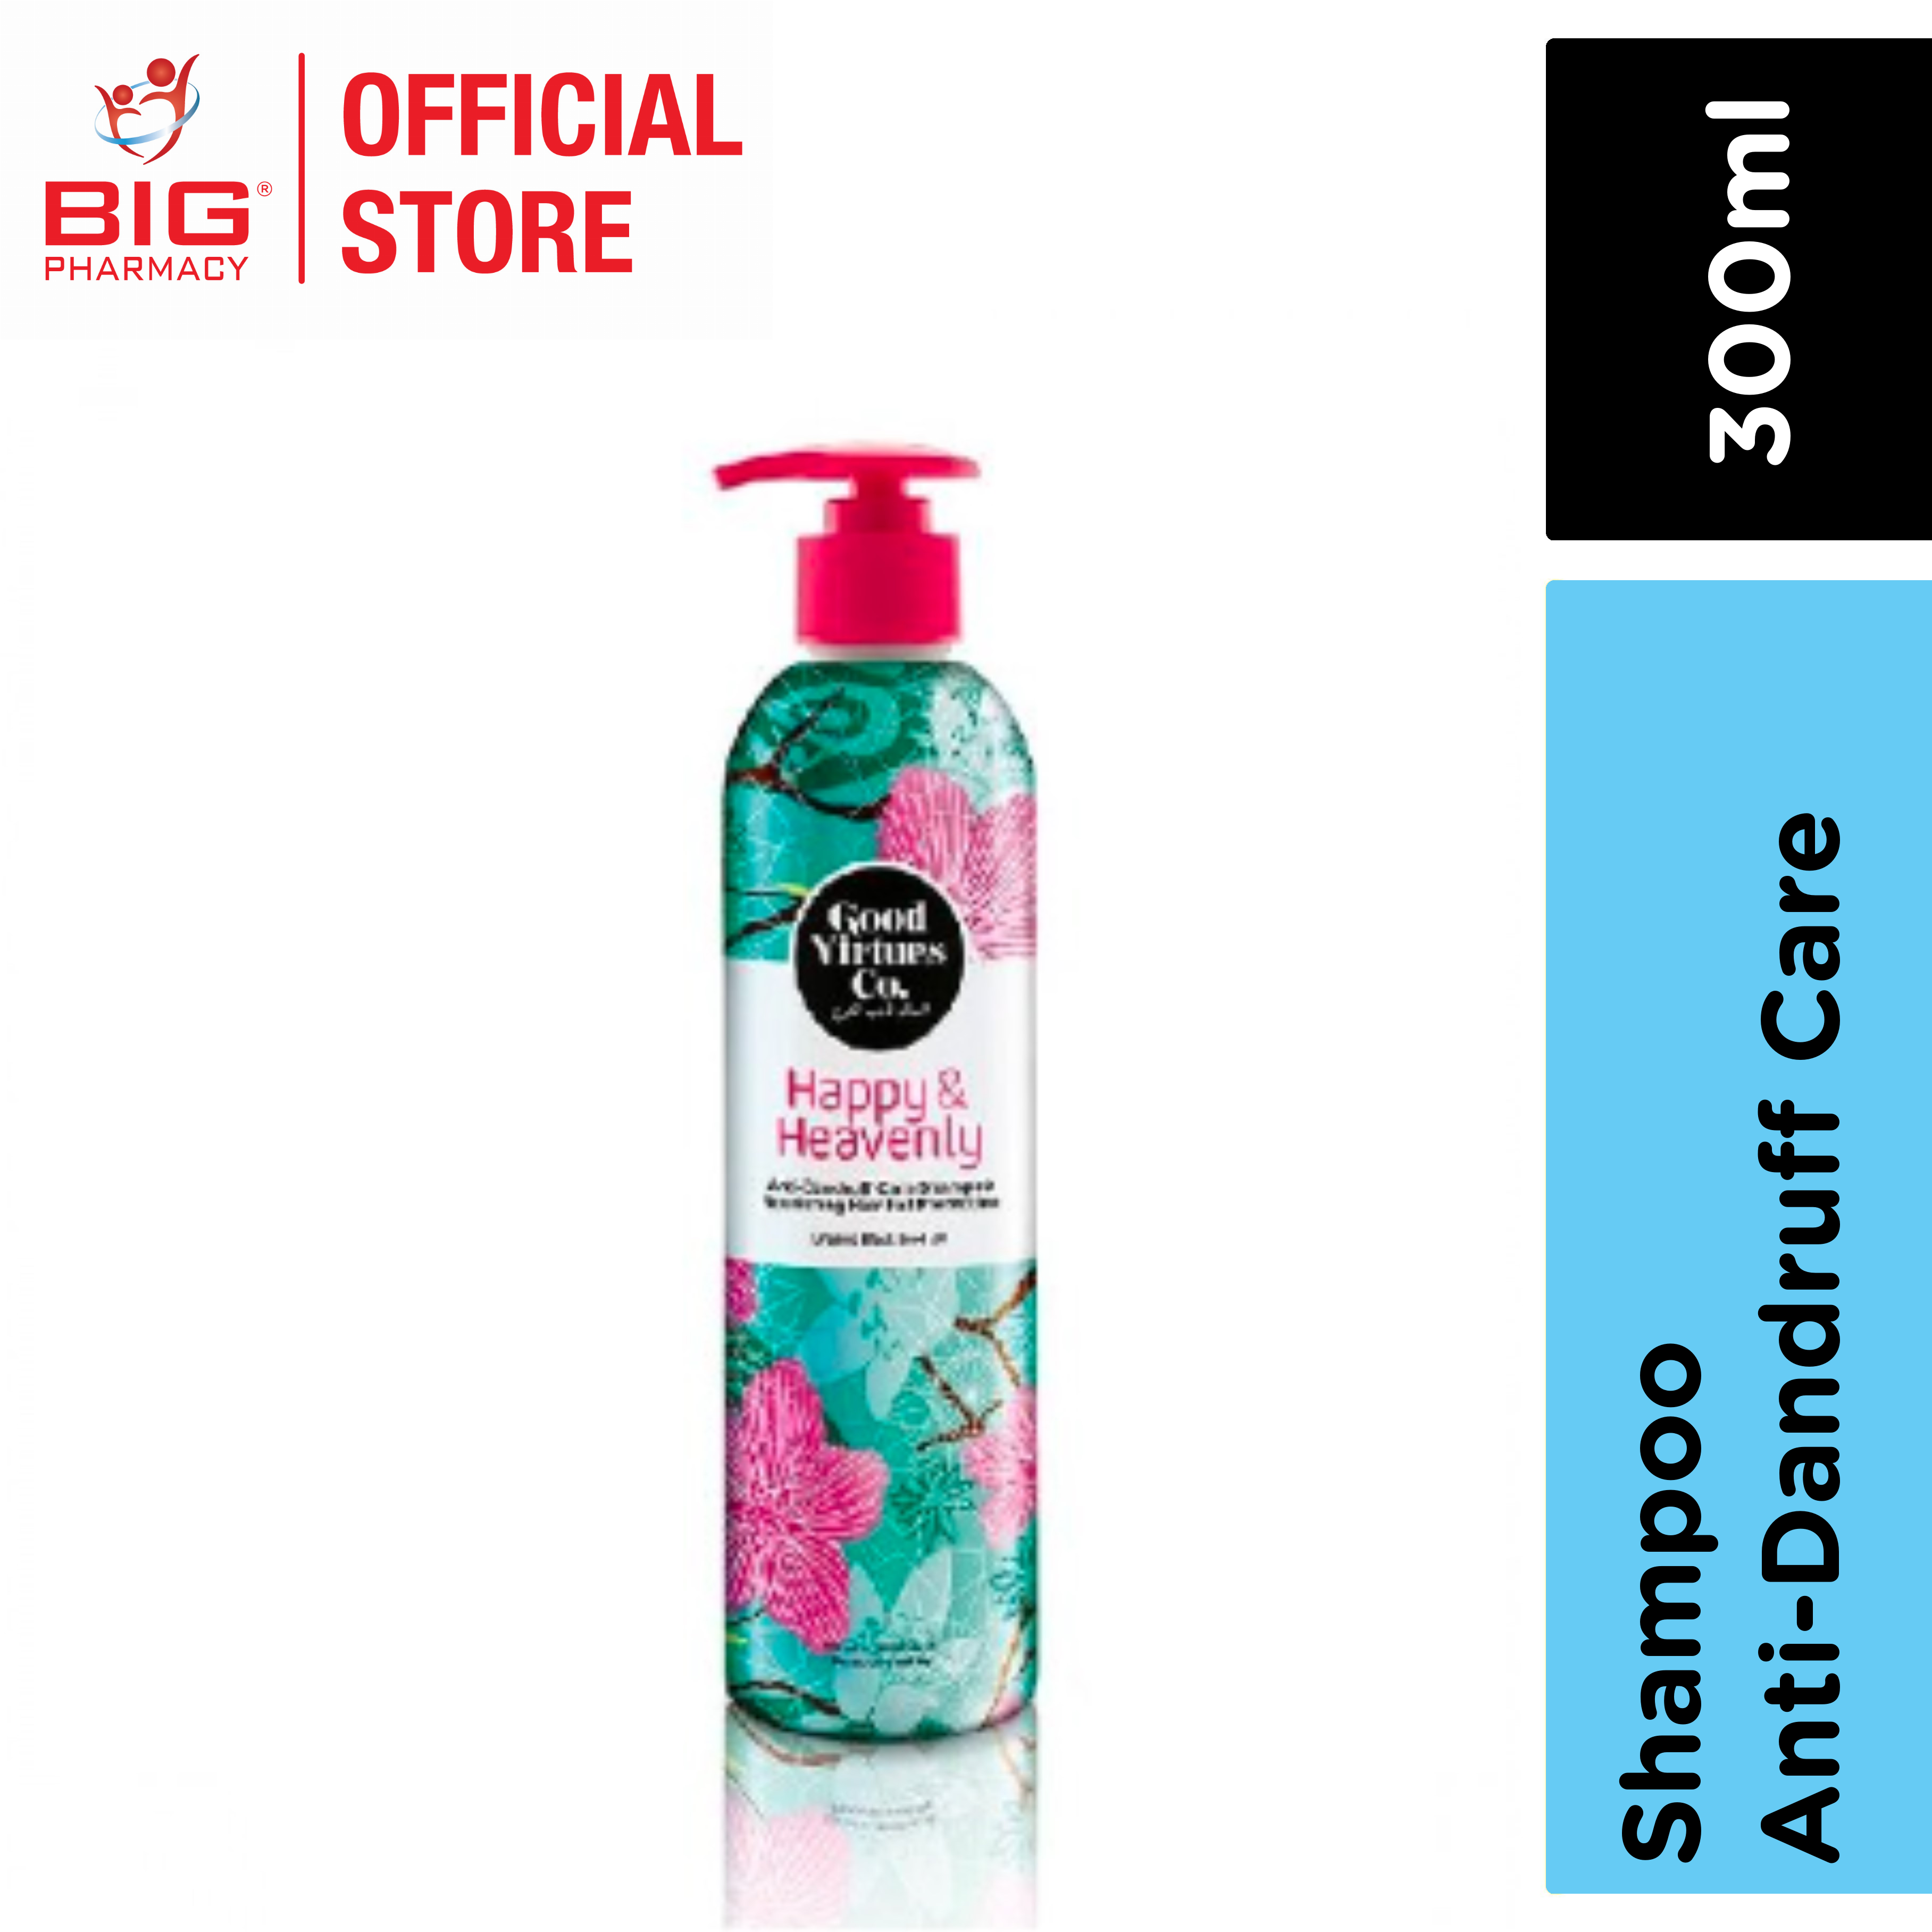 Good Virtue Co Anti-Dandruff Care Shampoo Nourishing Hair Fall Protection  300ML | Big Pharmacy